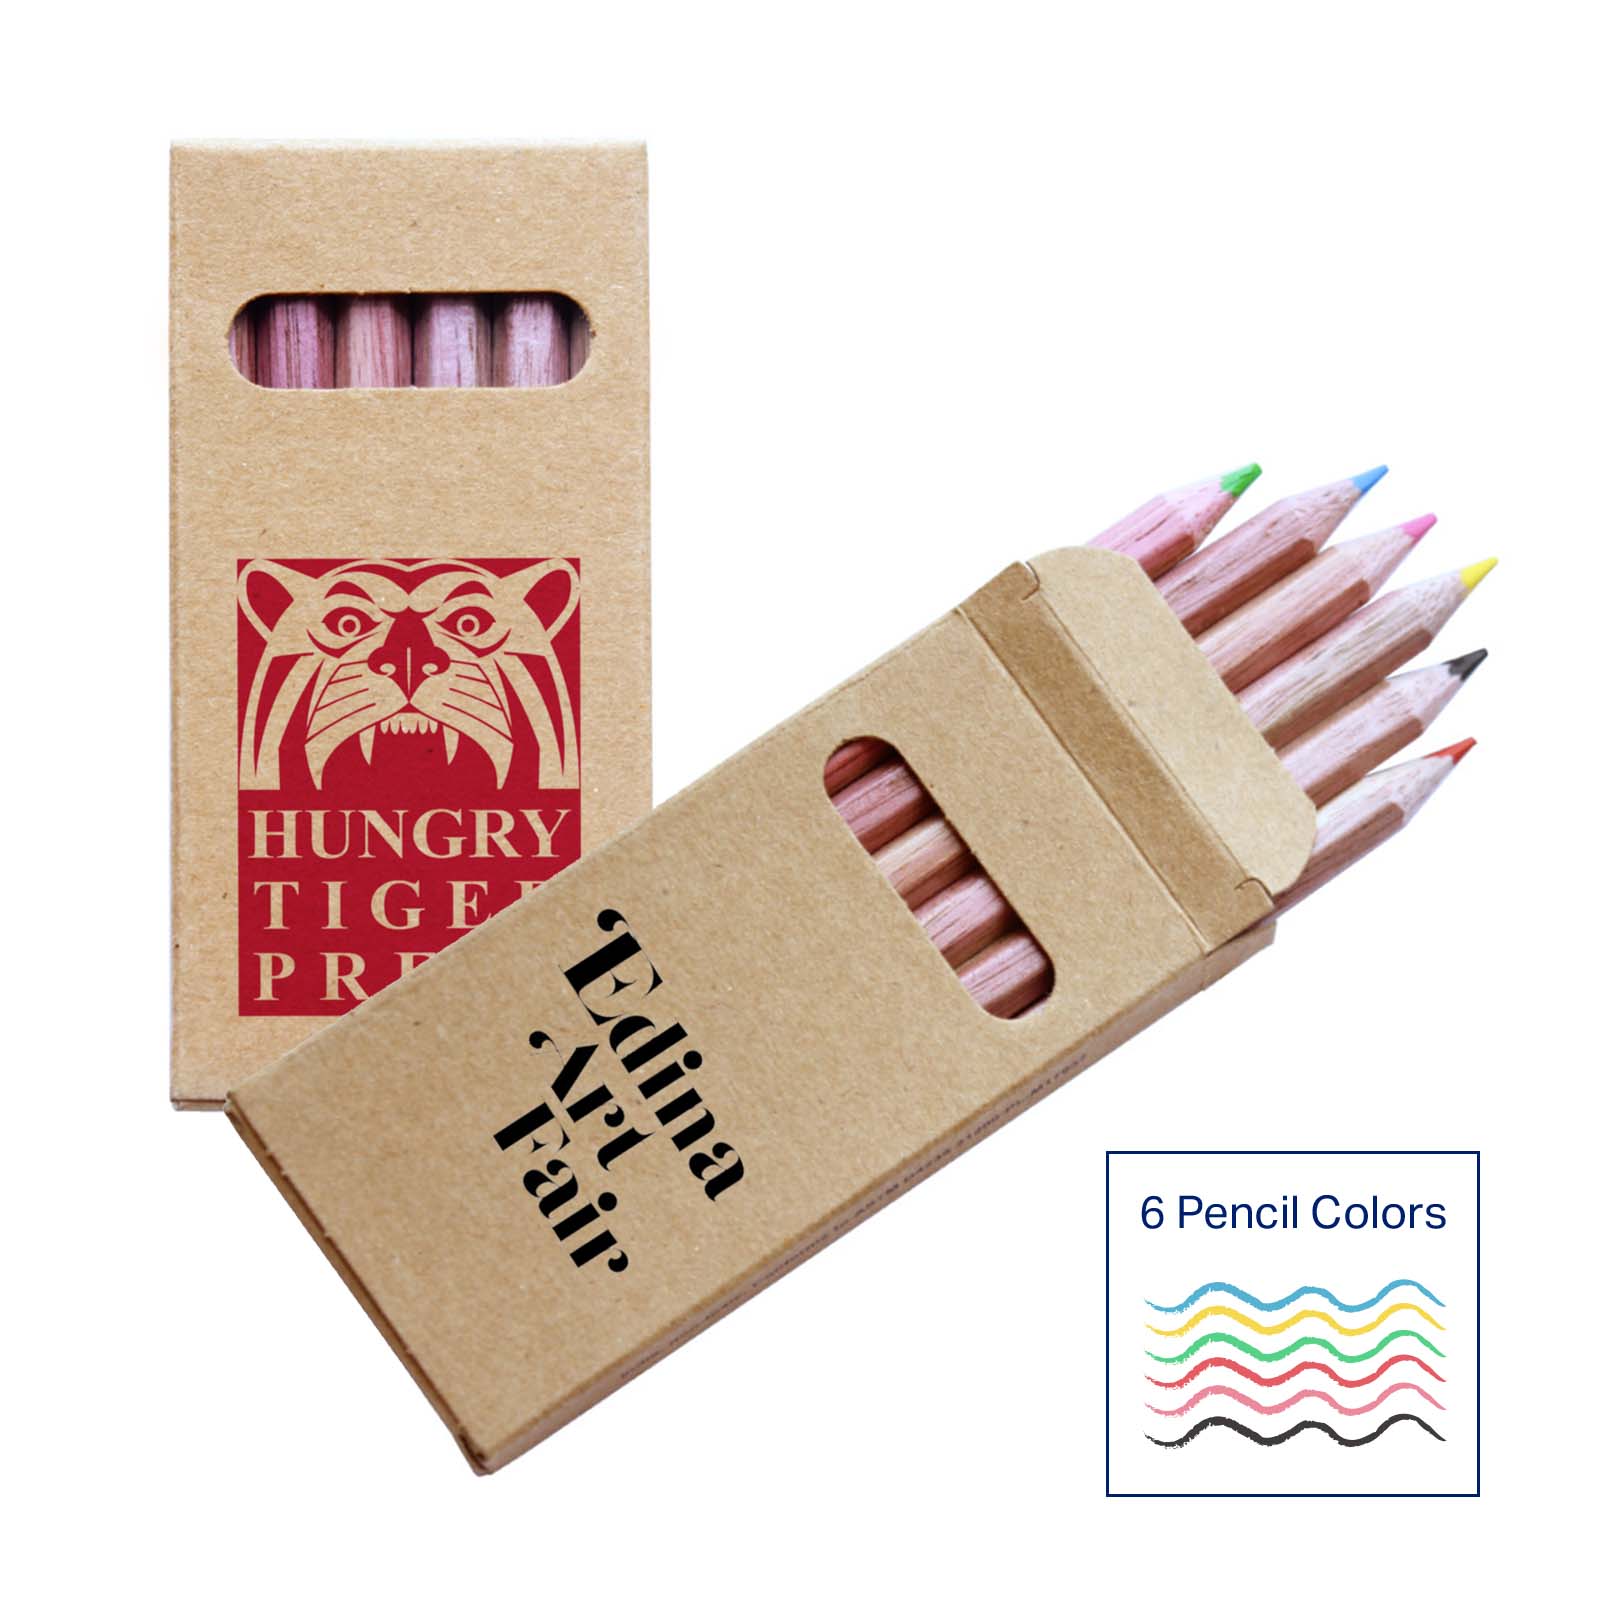 Six Color Wooden Pencil Set in Box